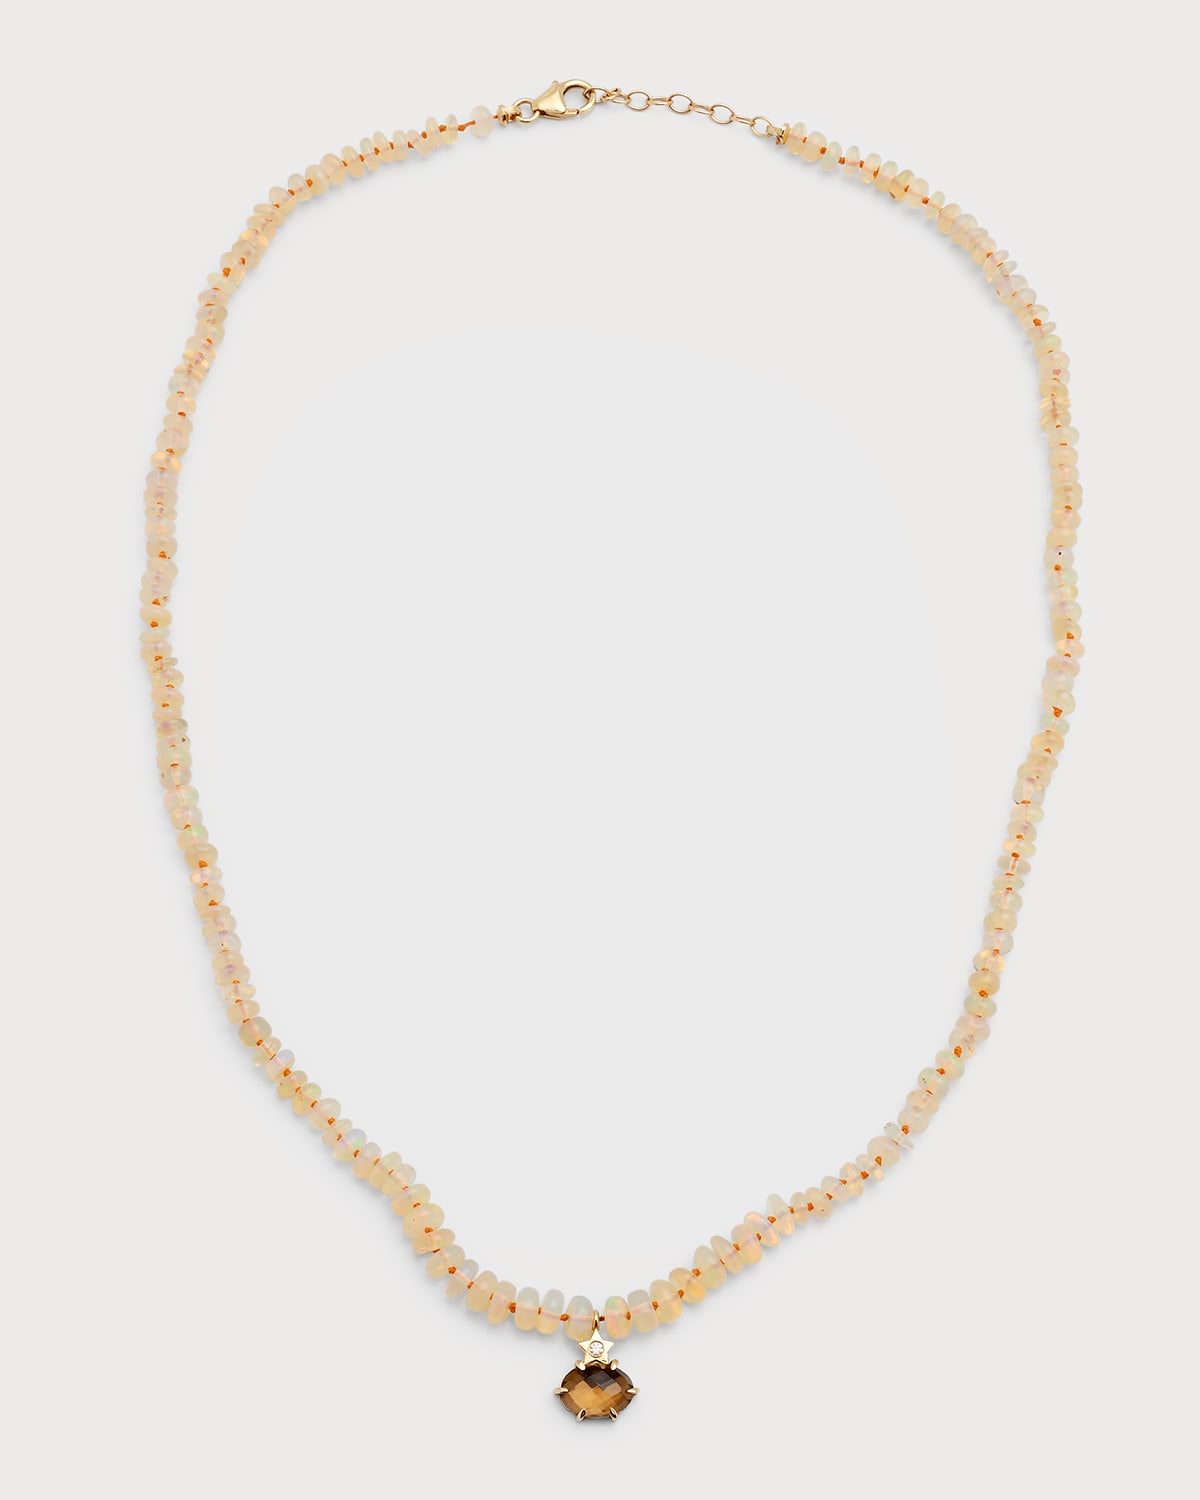 Andrea Fohrman Opal Beaded Necklace with Smokey Quartz Diamond Charm